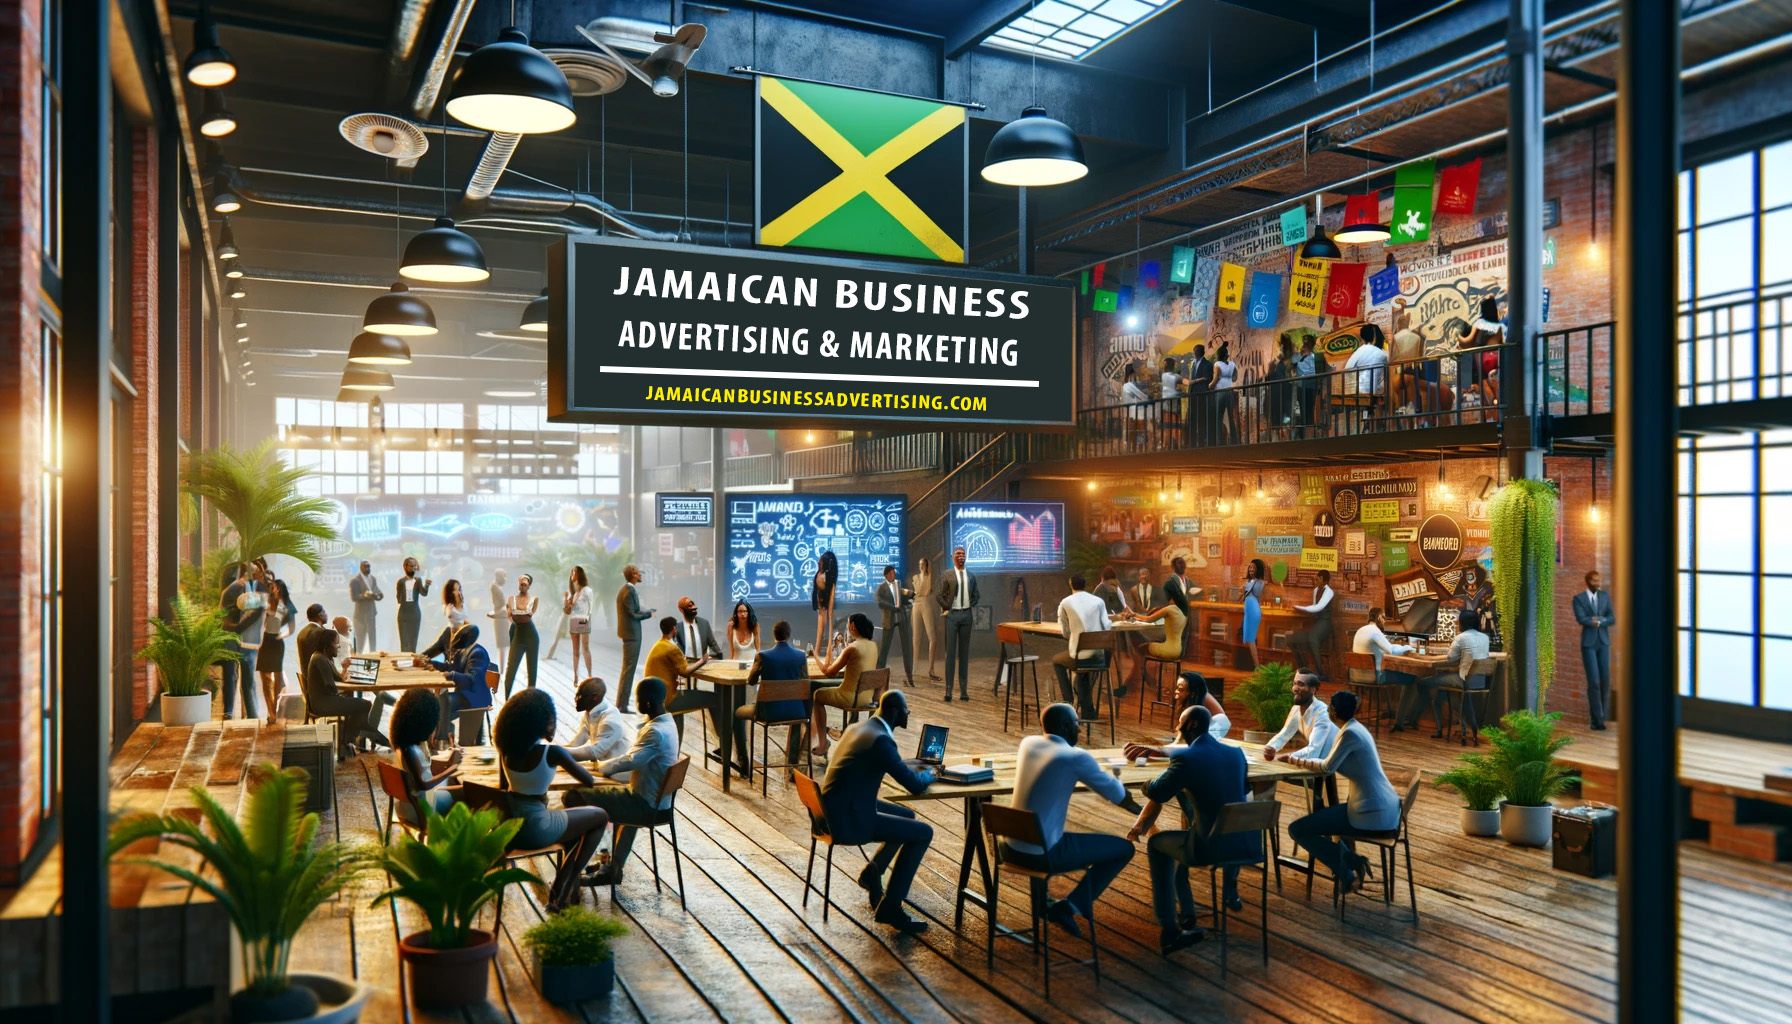 Jamaican Business Advertising & Marketing - JamaicanBusinessAdvertising.com